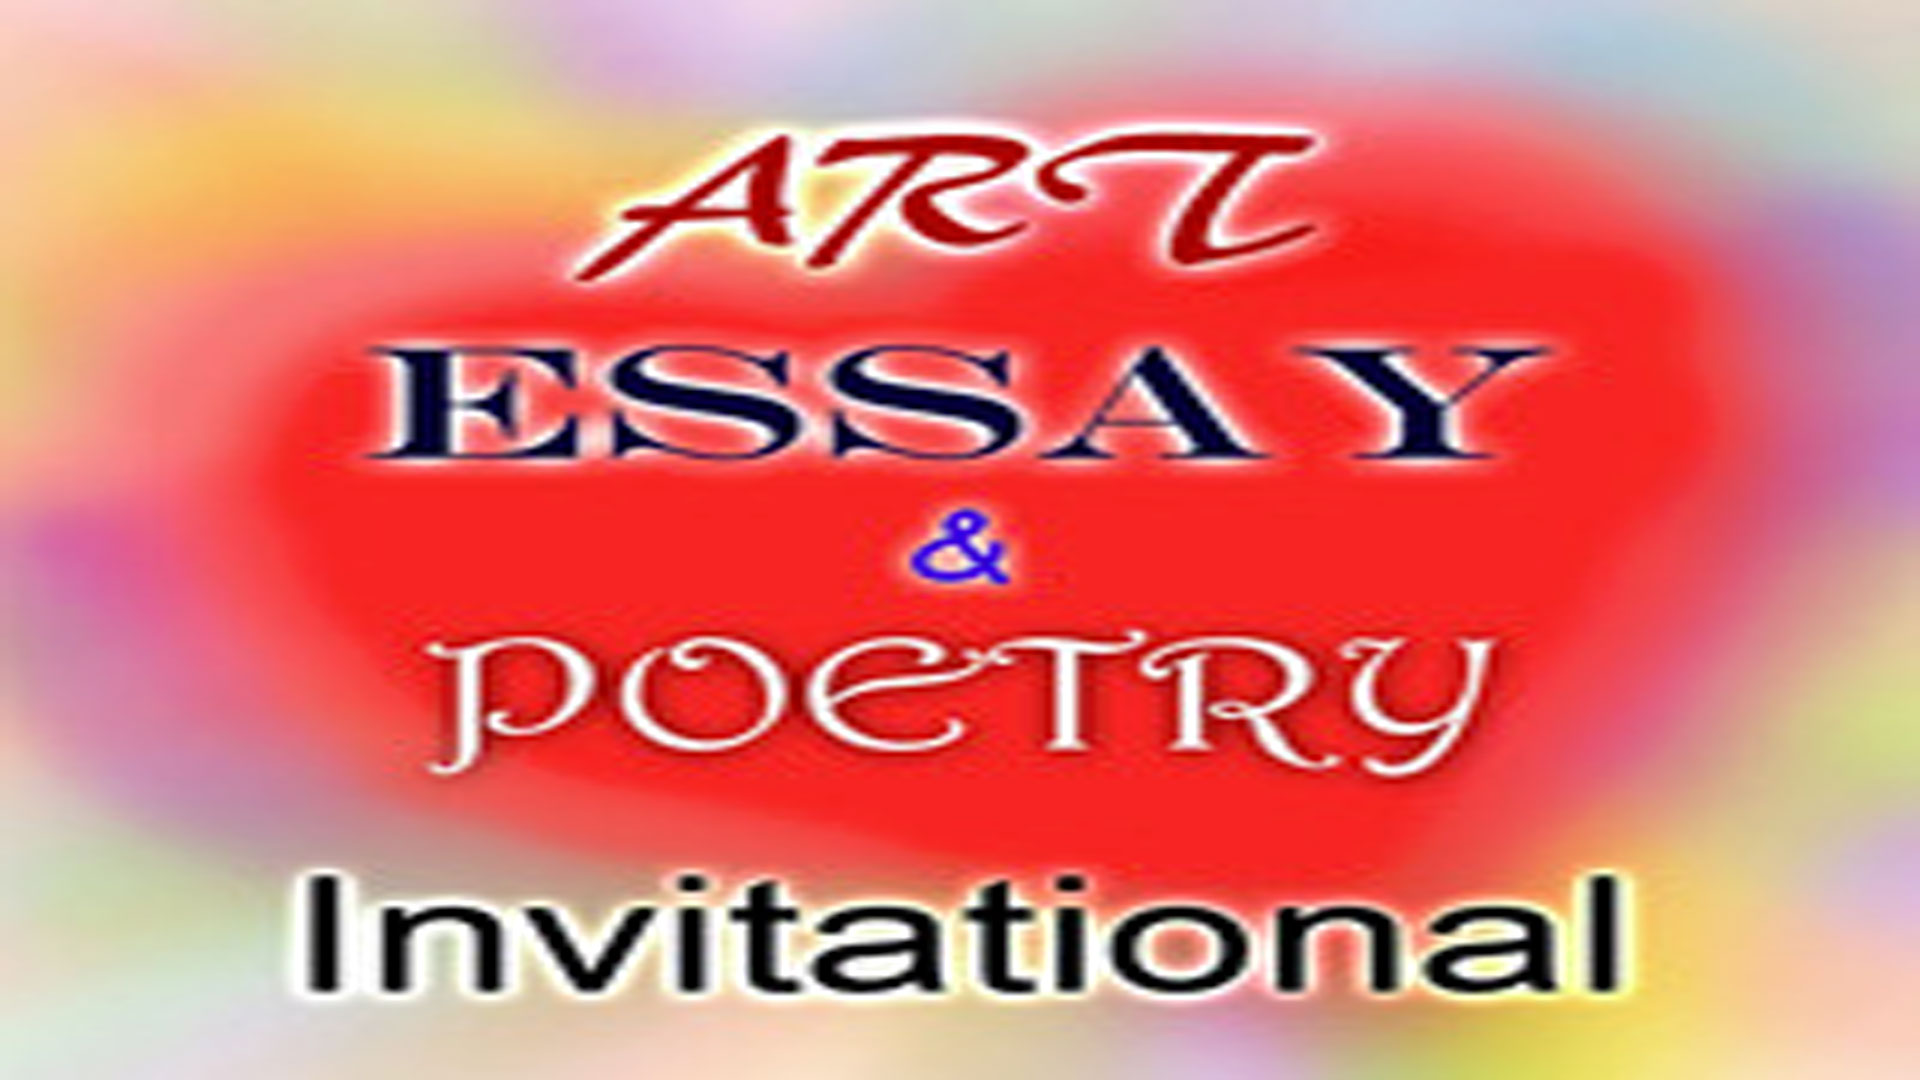 art_essay_poetry_invitational